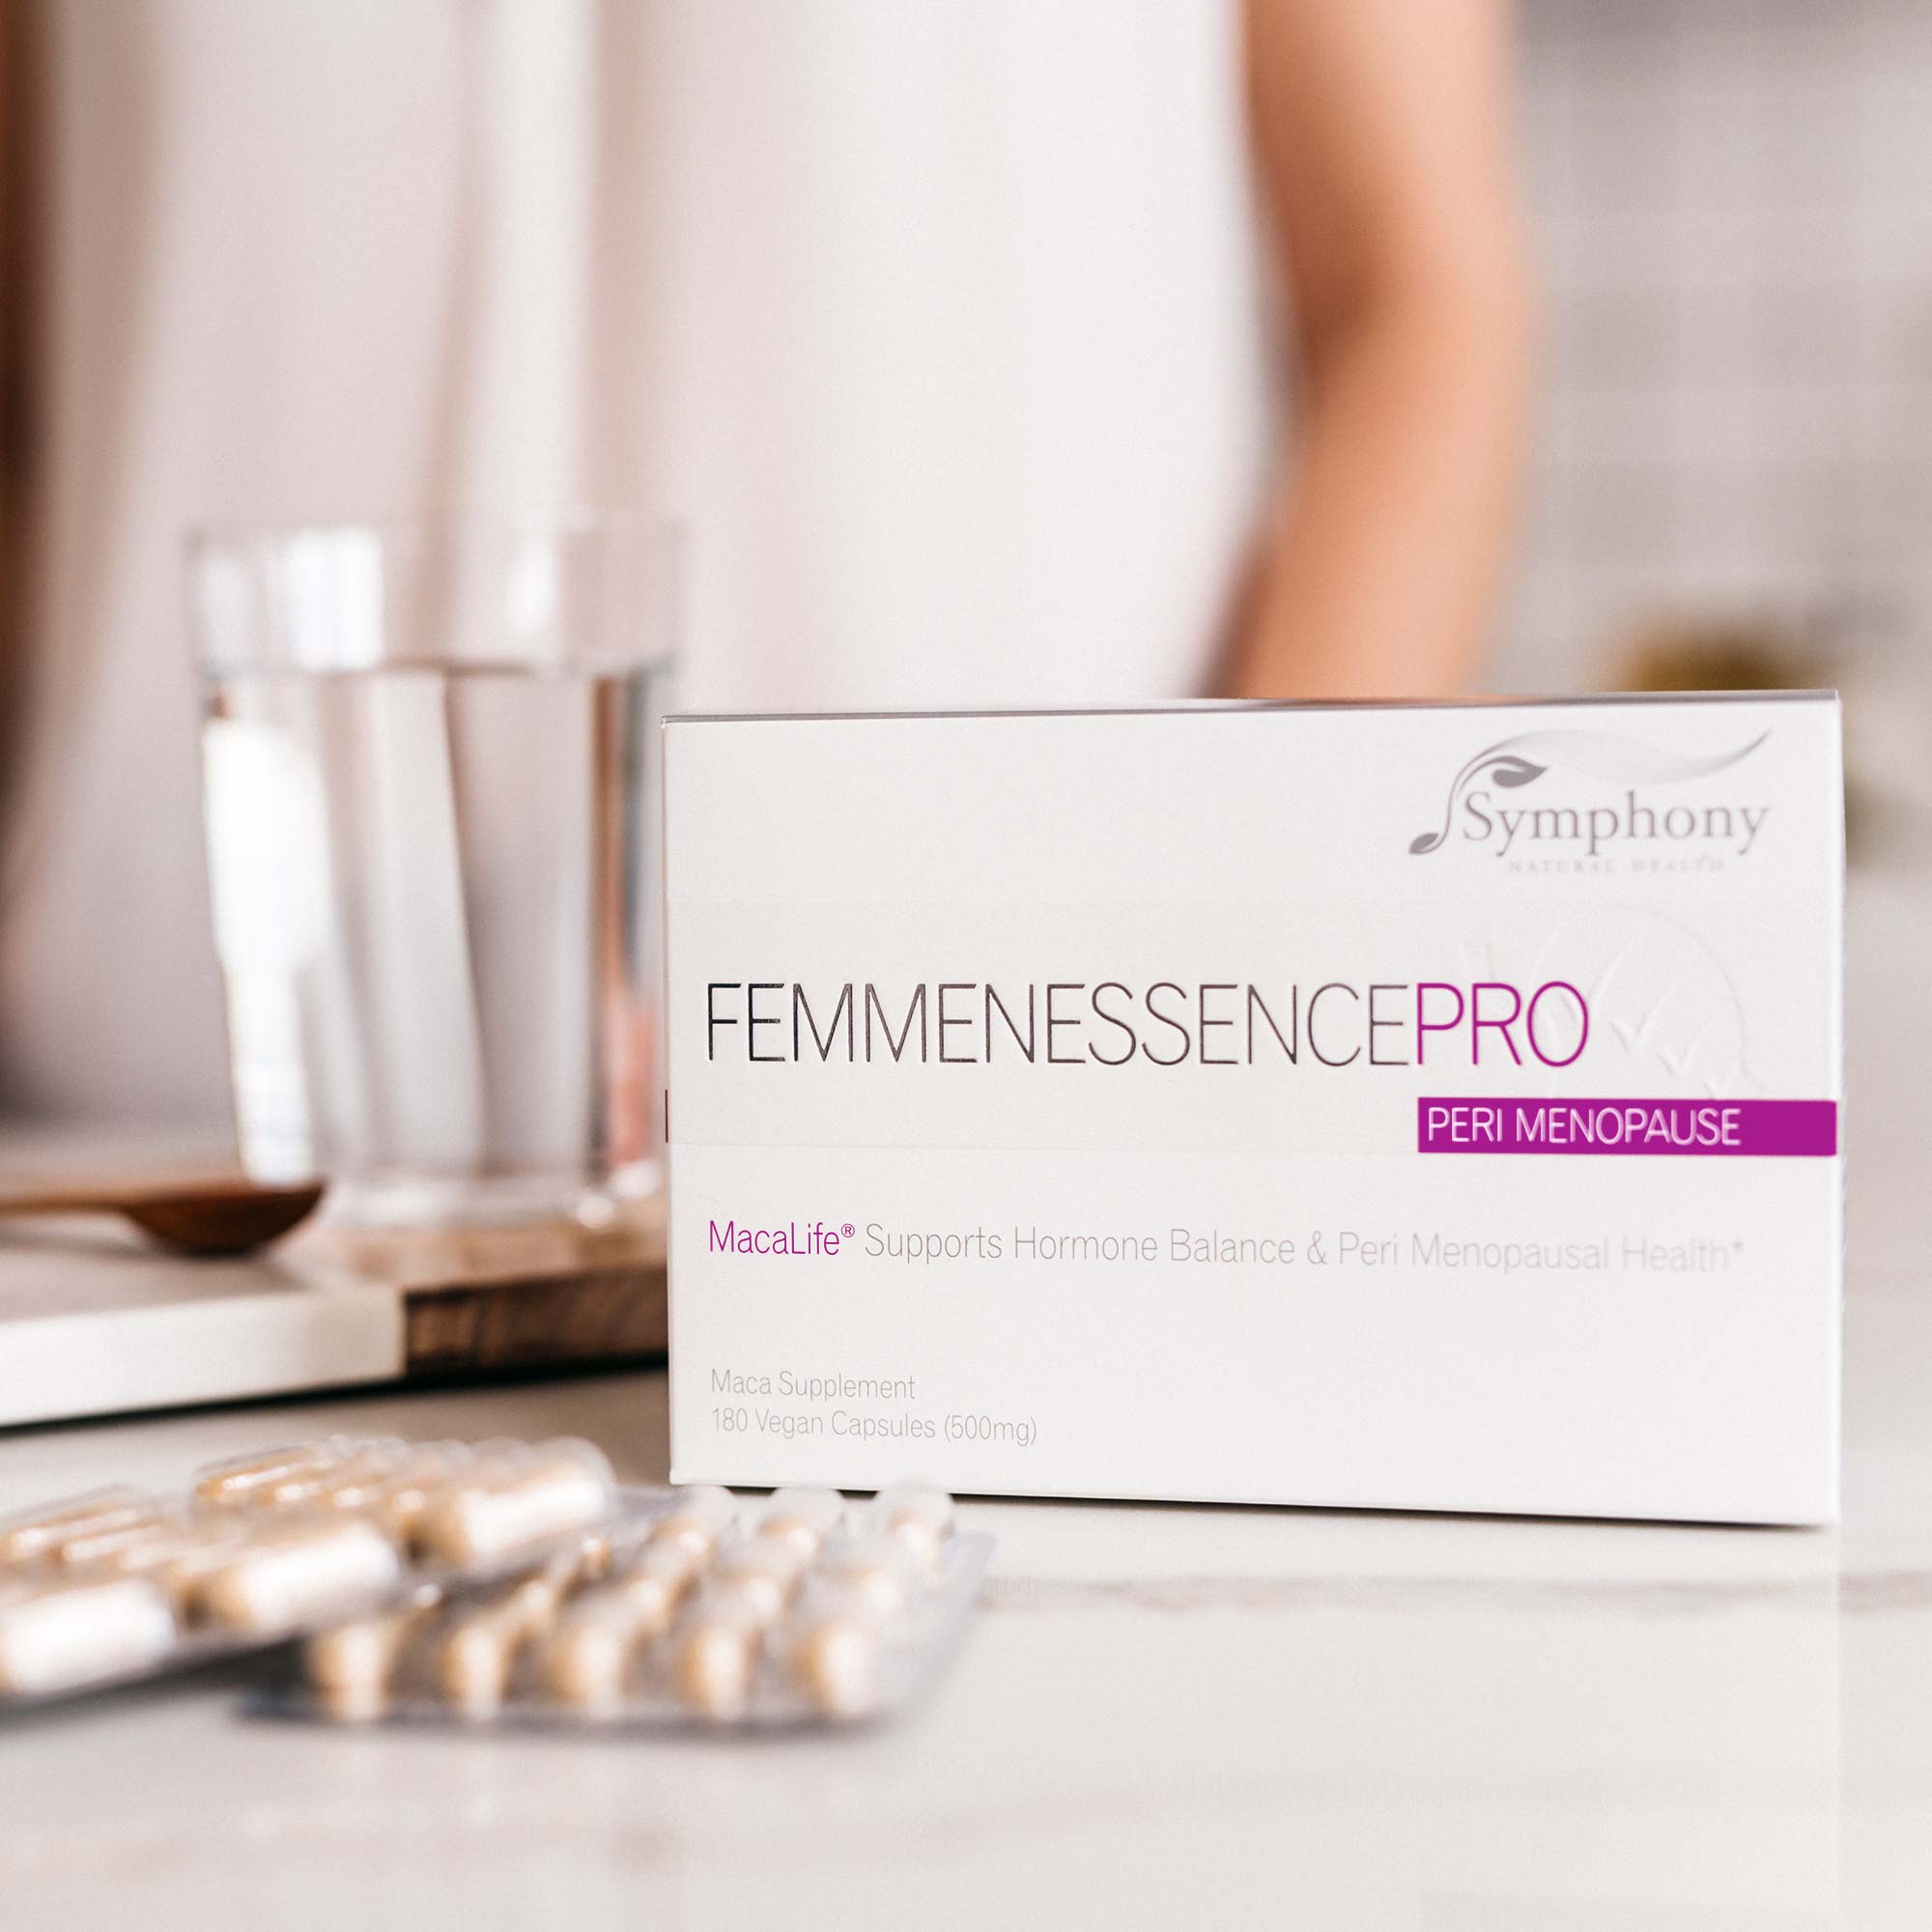 FemmenessencePRO PERI supports hormone balance & peri menopausal health 